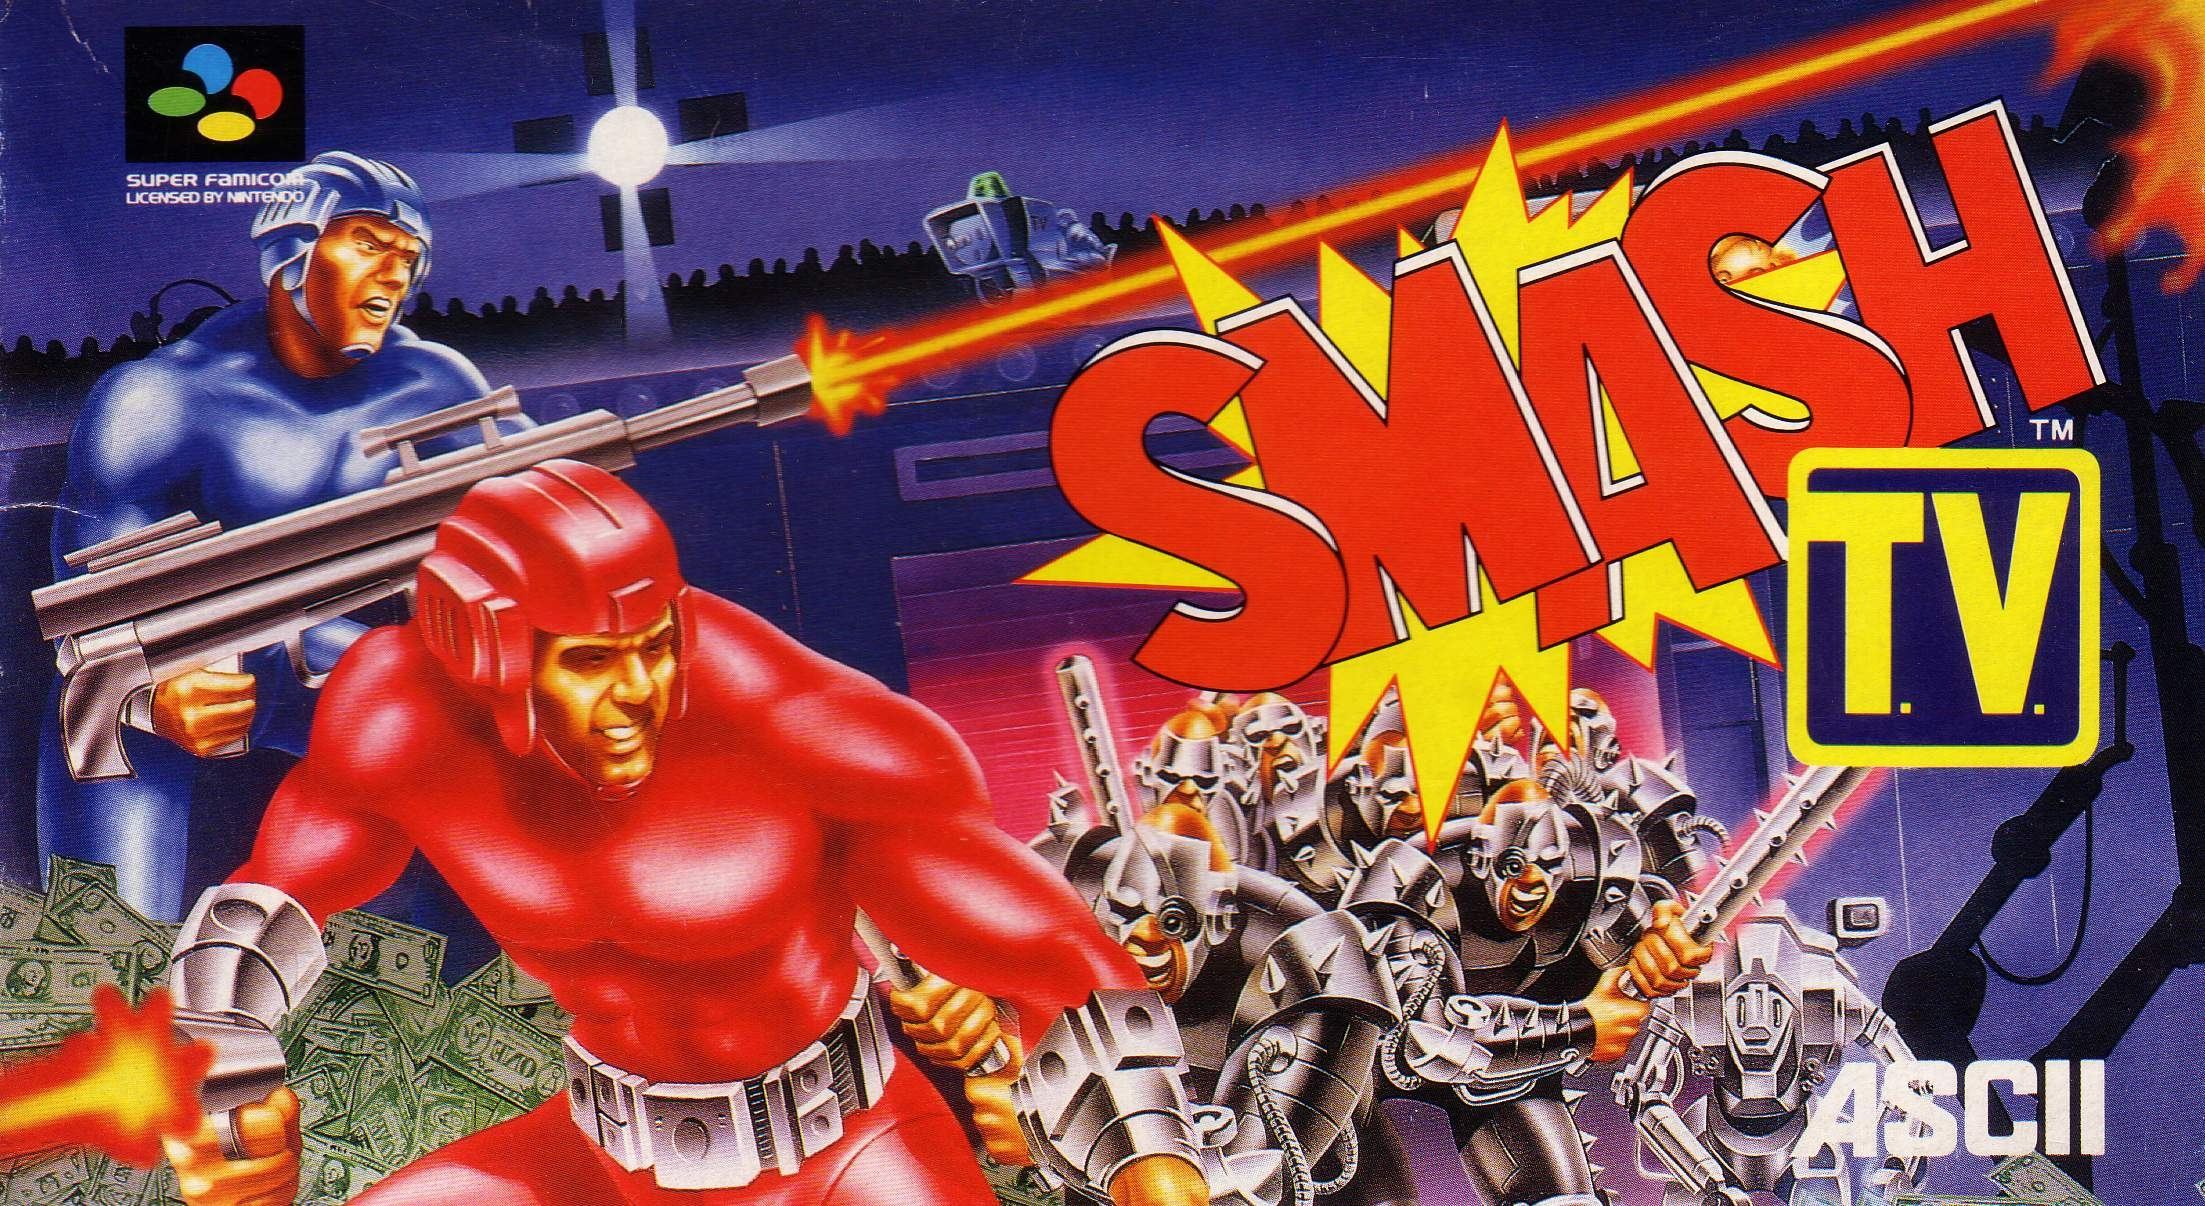 Super Smash T.V. for Super Famicom / SNES